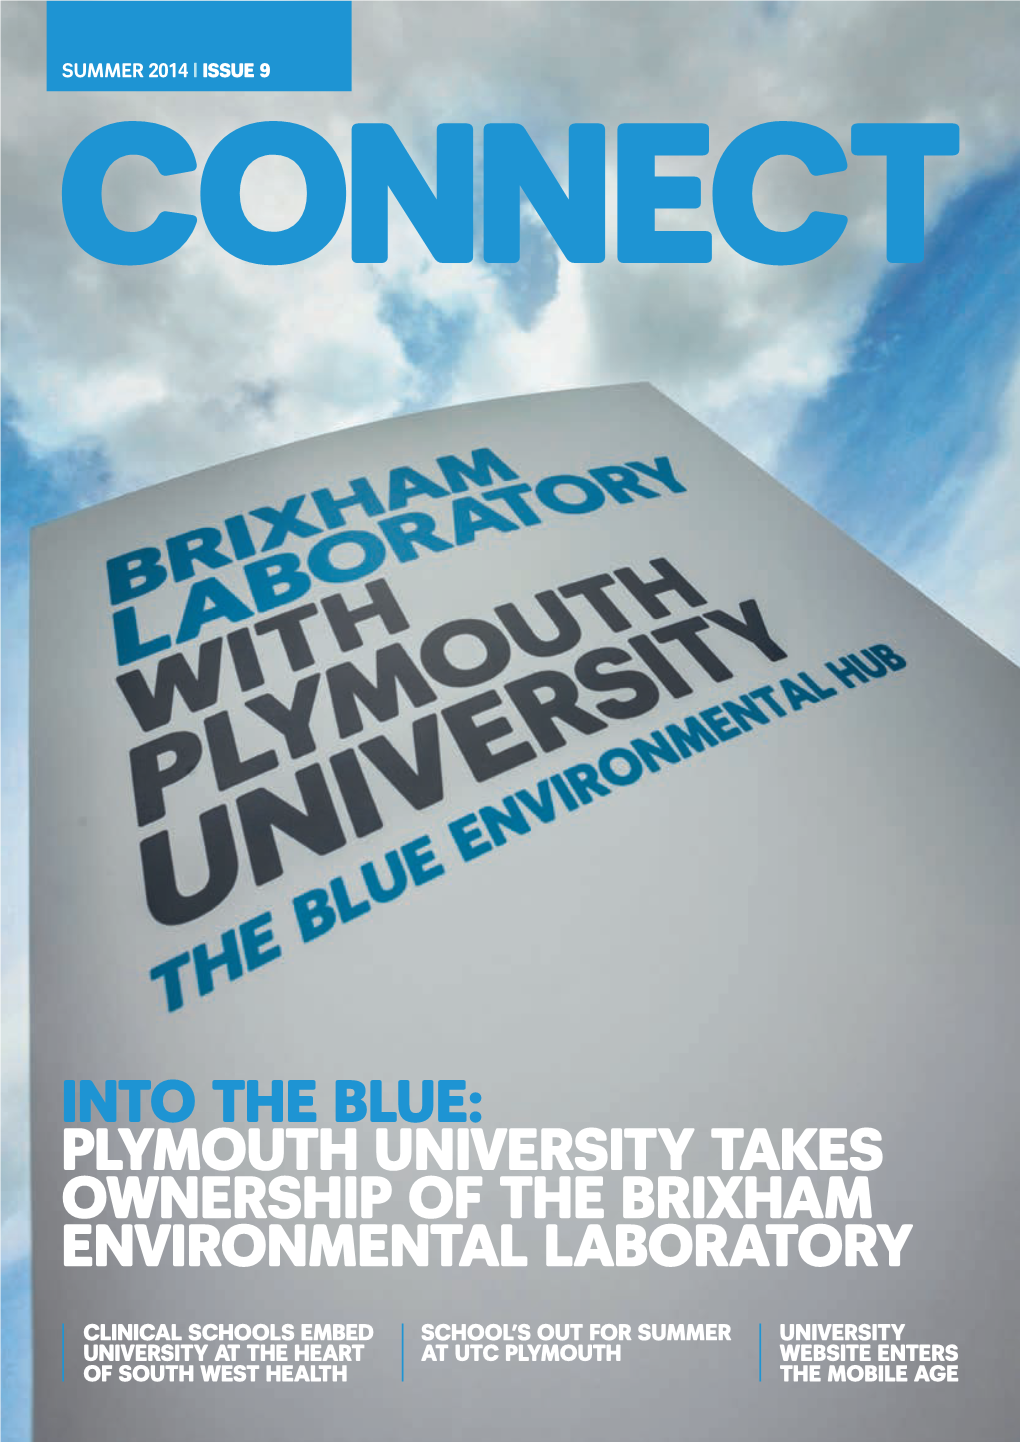 Plymouth University Takes Ownership of the Brixham Environmental Laboratory